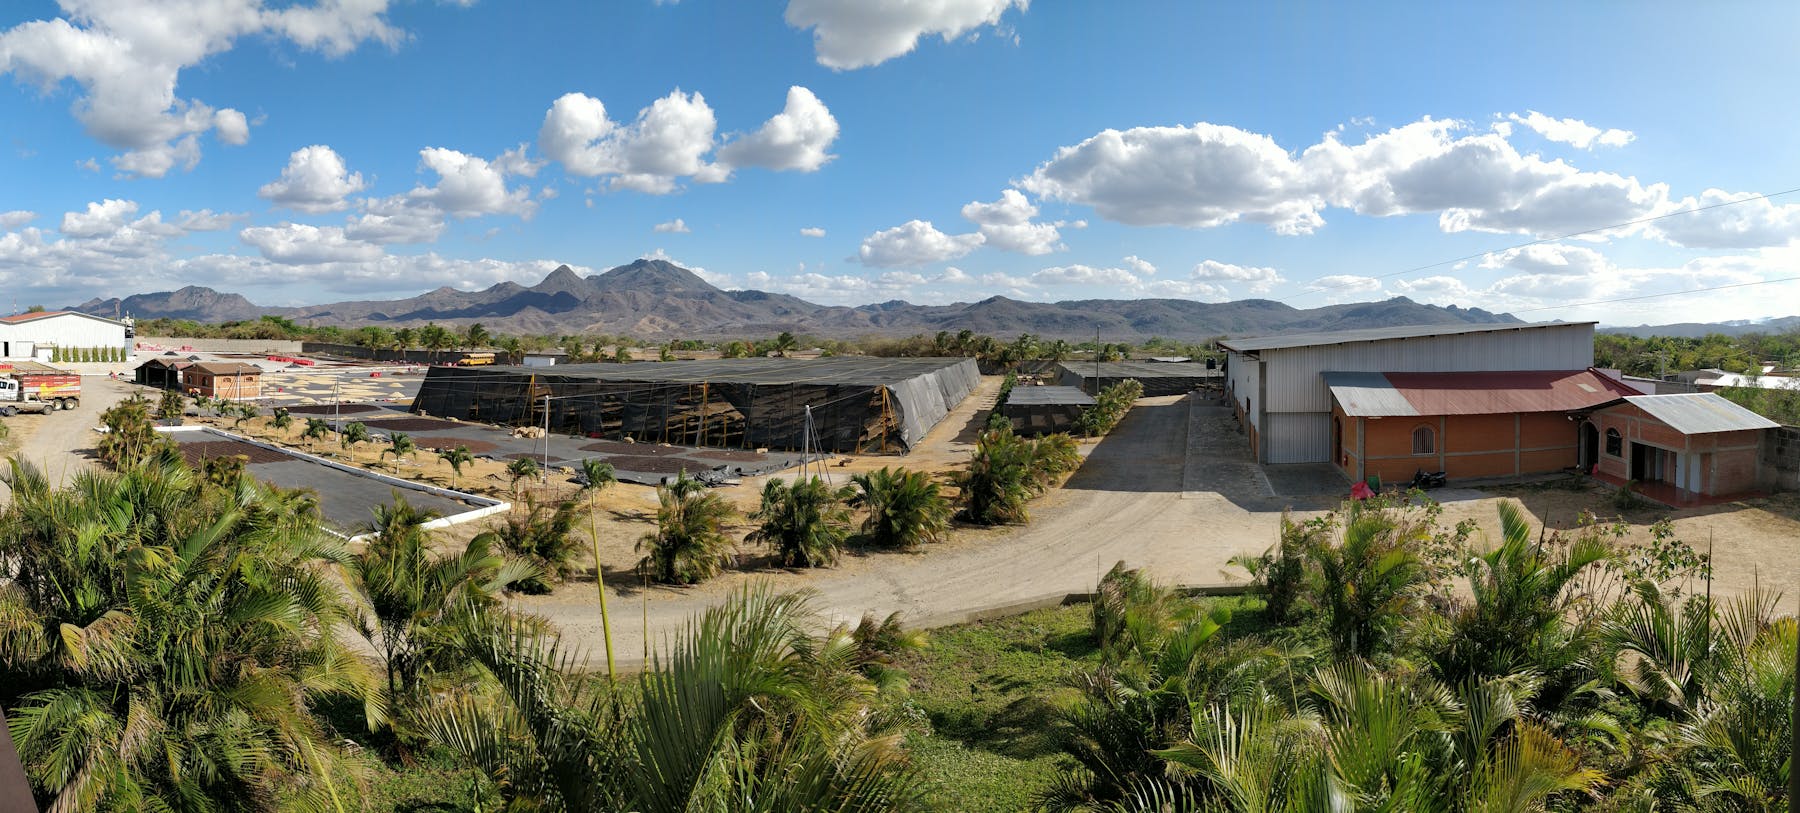 Benificio Las Segovias - Panorama